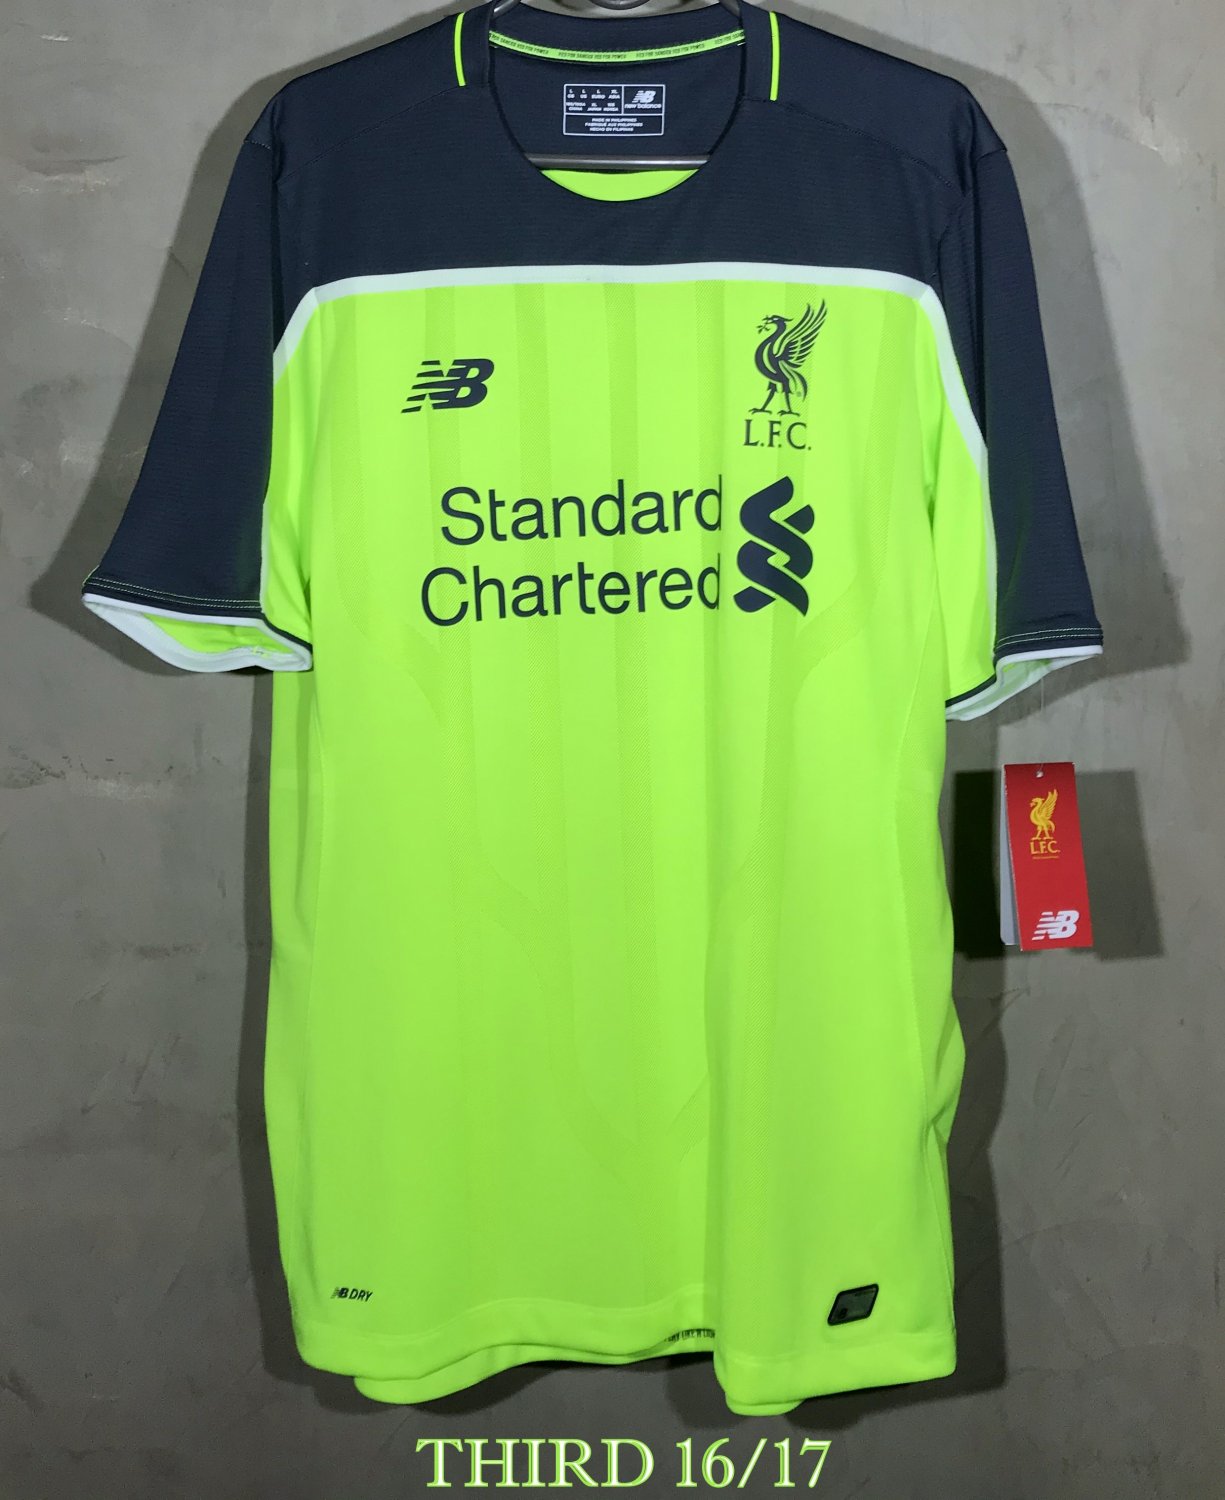 Liverpool Third football shirt 2016 - 2017. Sponsored by Standard Chartered